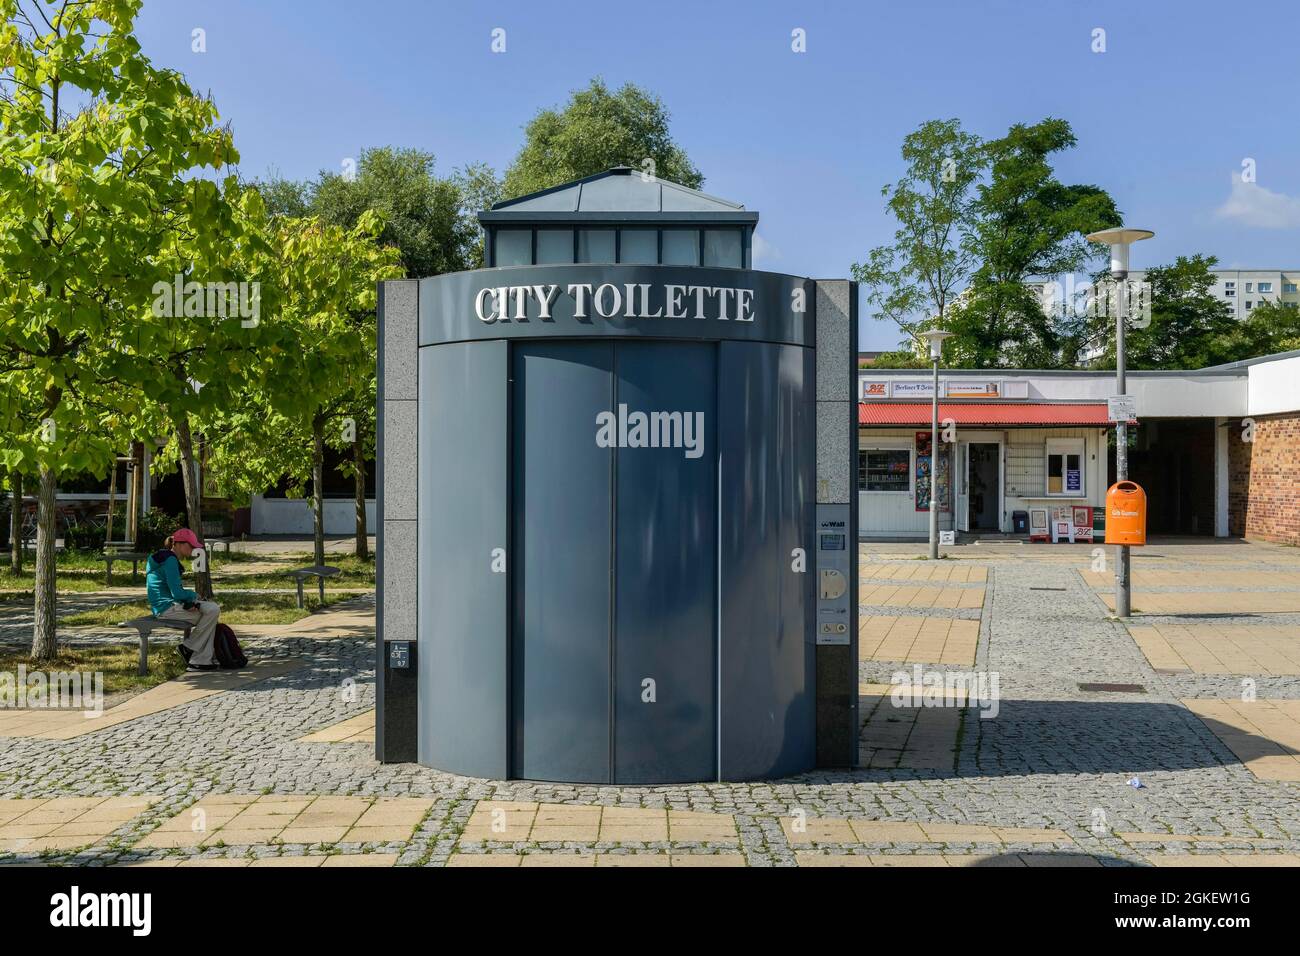 Berlin city toilet -Fotos und -Bildmaterial in hoher Auflösung – Alamy